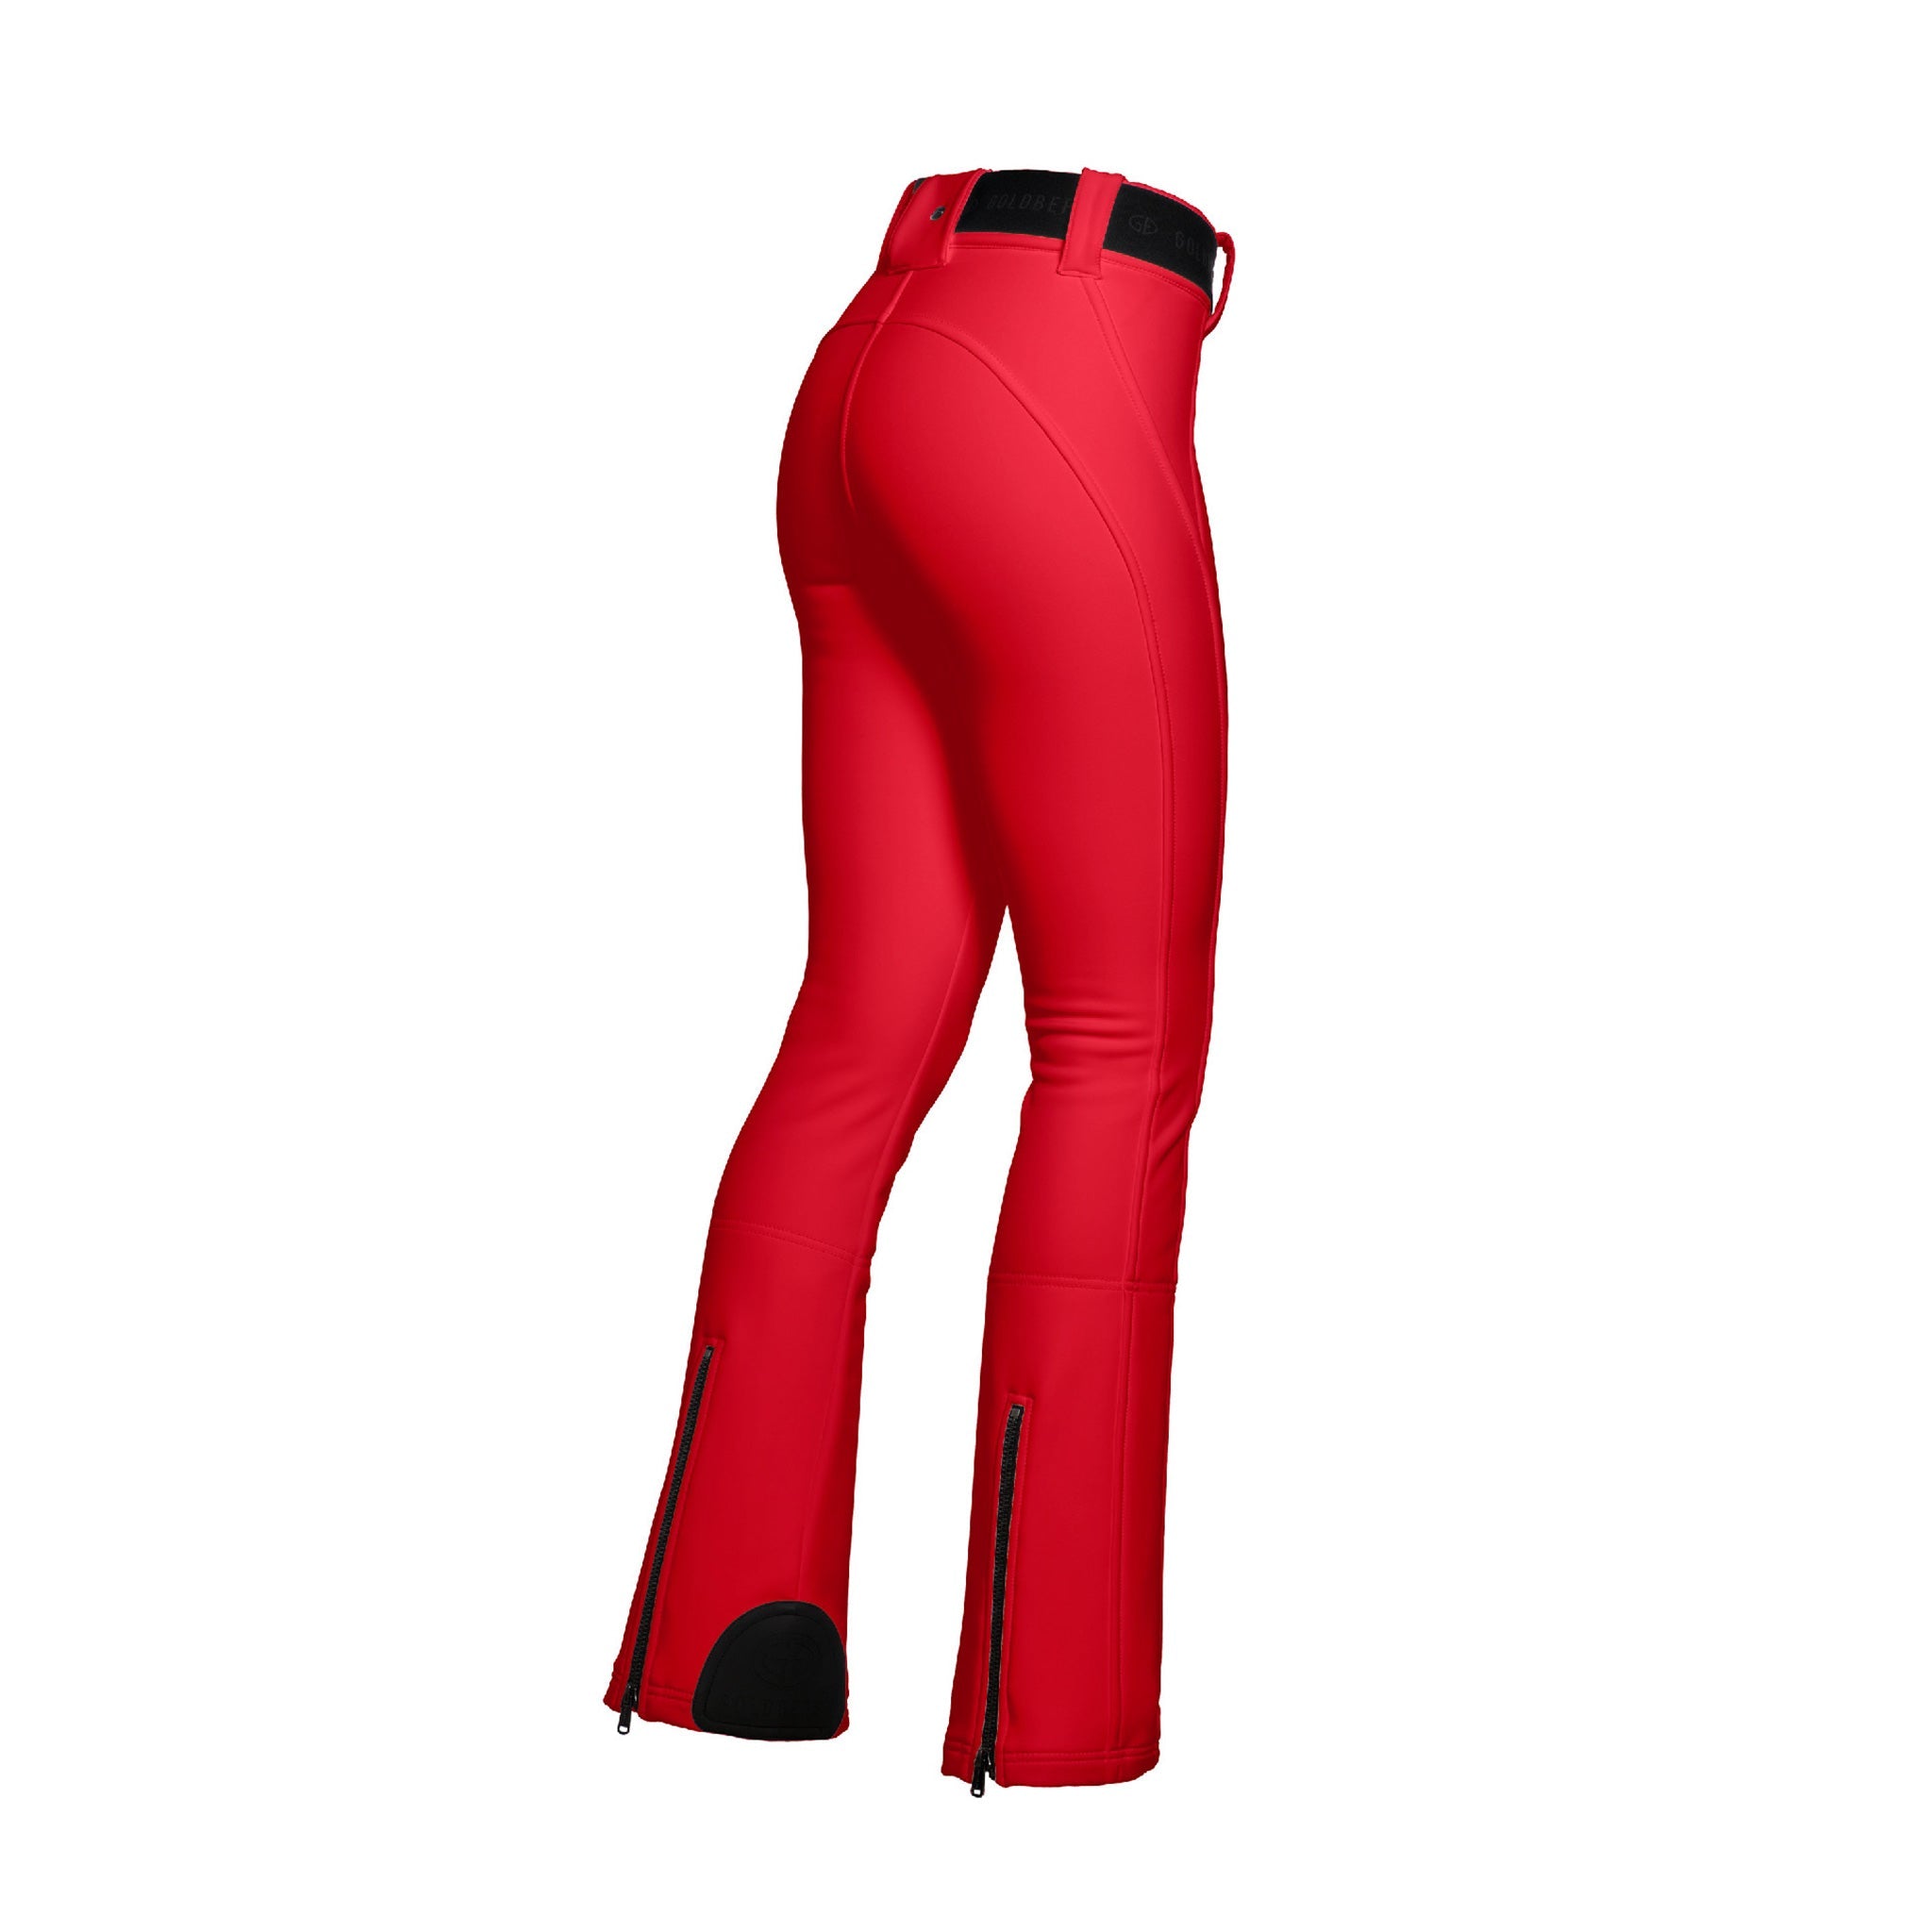 Pippa Longer Length Ski Pants in Flame Red